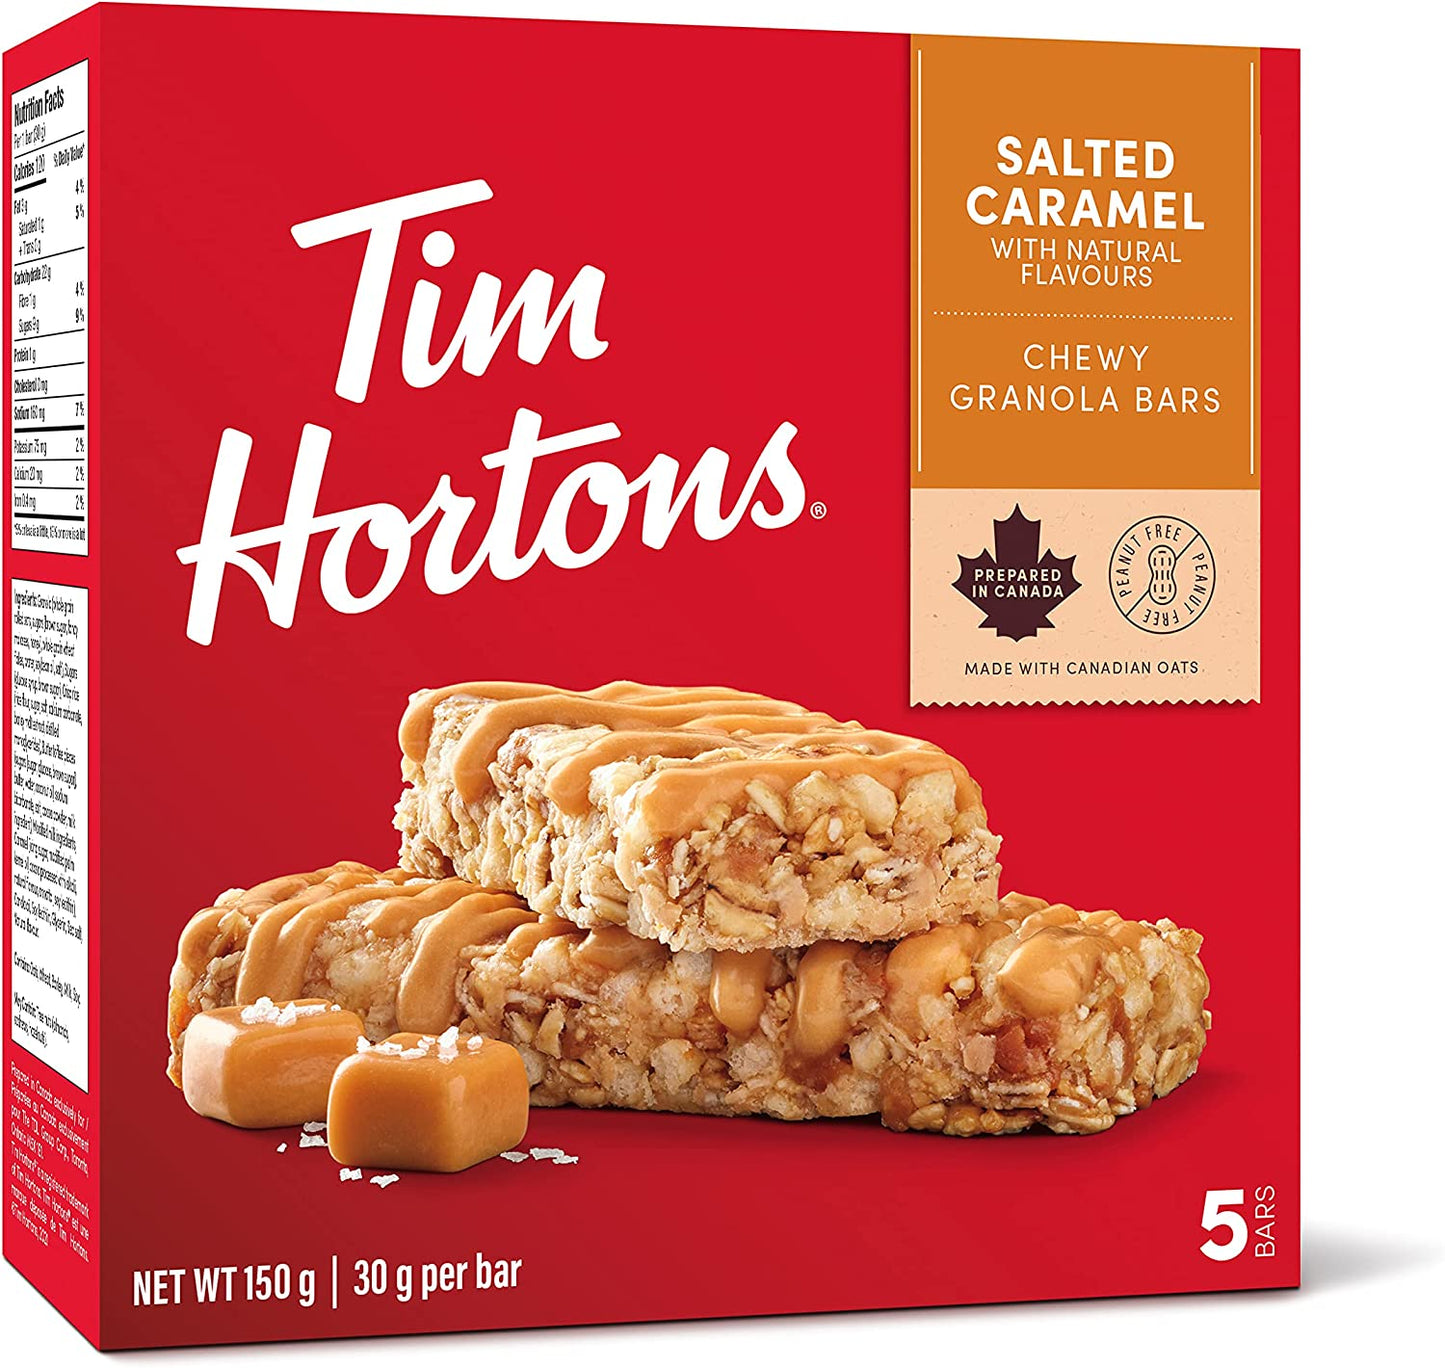 Tim Hortons Salted Caramel Granola Bars, Peanut Free, 5 Count